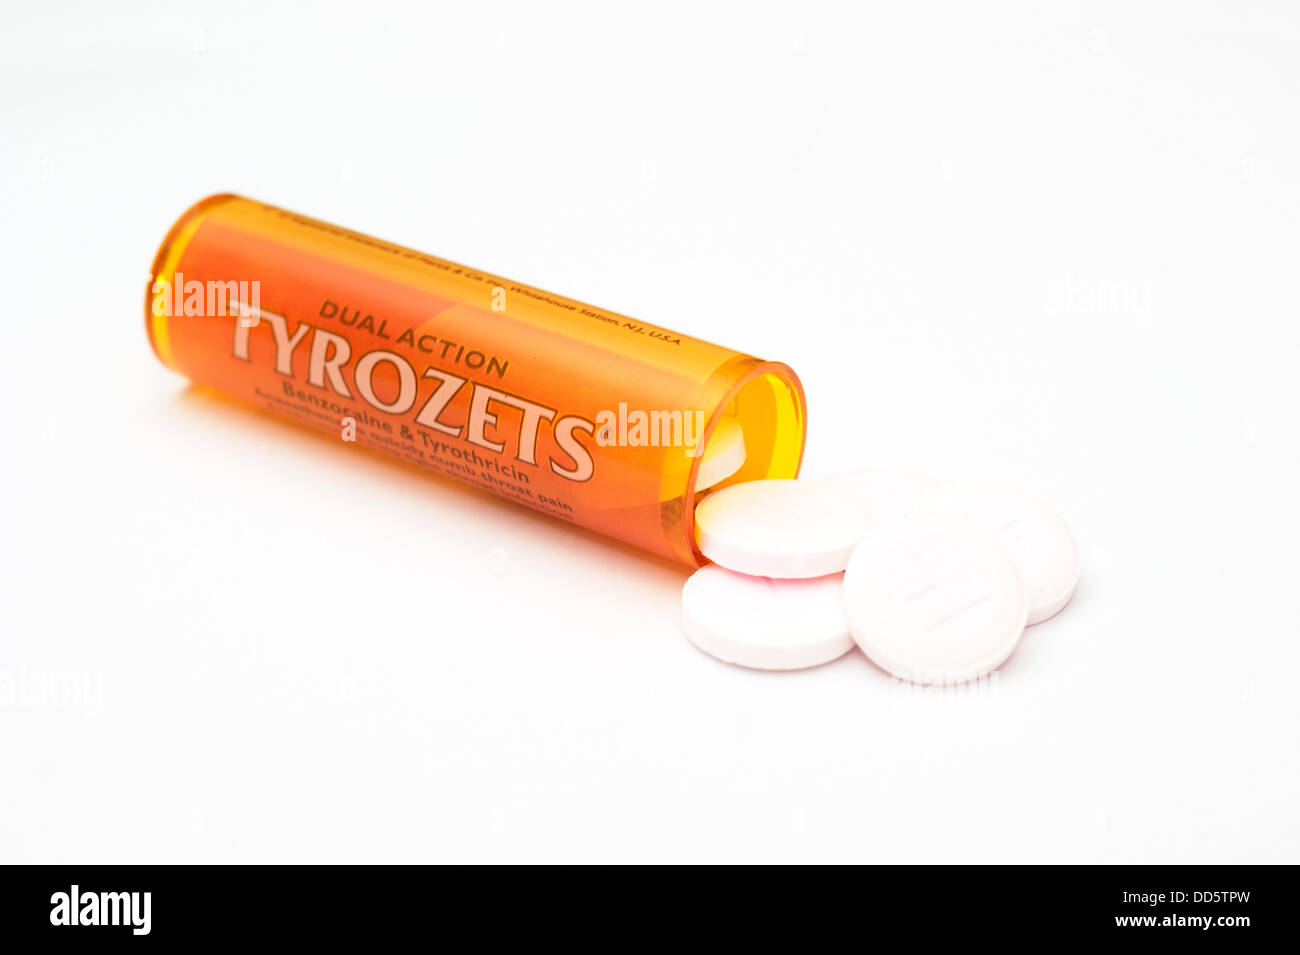 Tyrozets (Tyrothricin Benzocain) Antibiotika Narkose Tabletten Medizin für Infektionen & Irritationen im Mund & Kehle Stockfoto